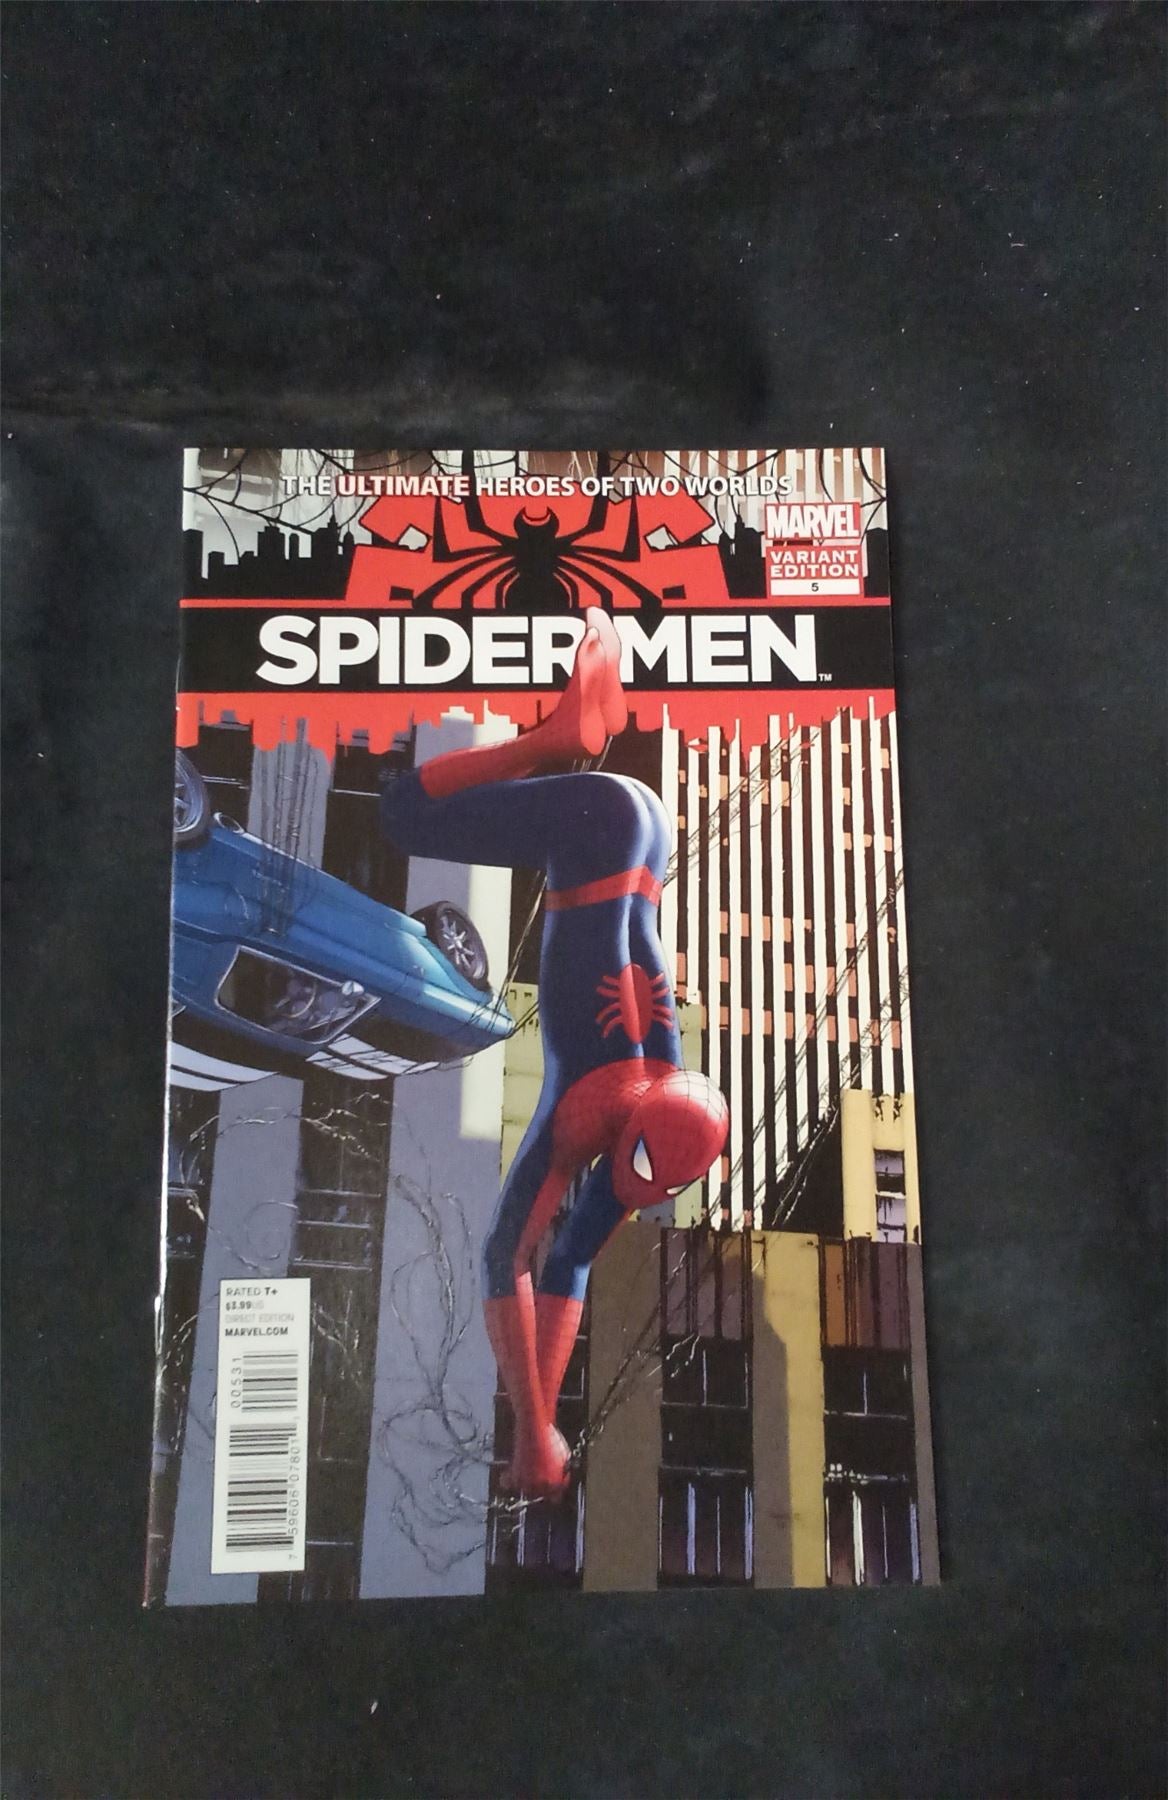 Spider-Men #5 Variant Edition - Travis Charest Cover 2012 marvel Comic Book